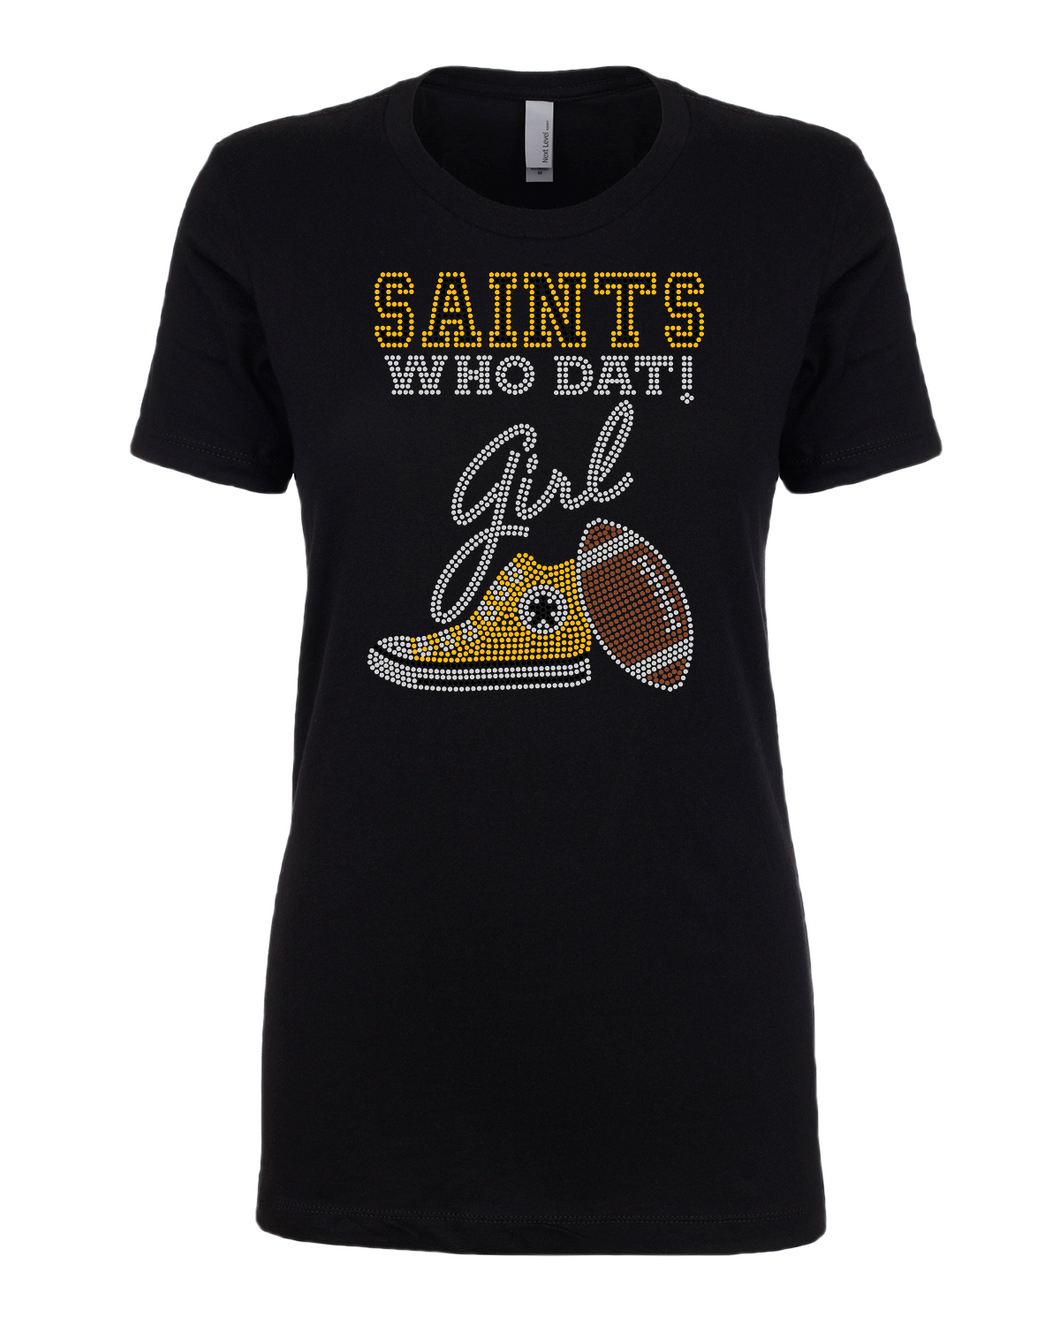 Saints  - Who Dat! - Girl